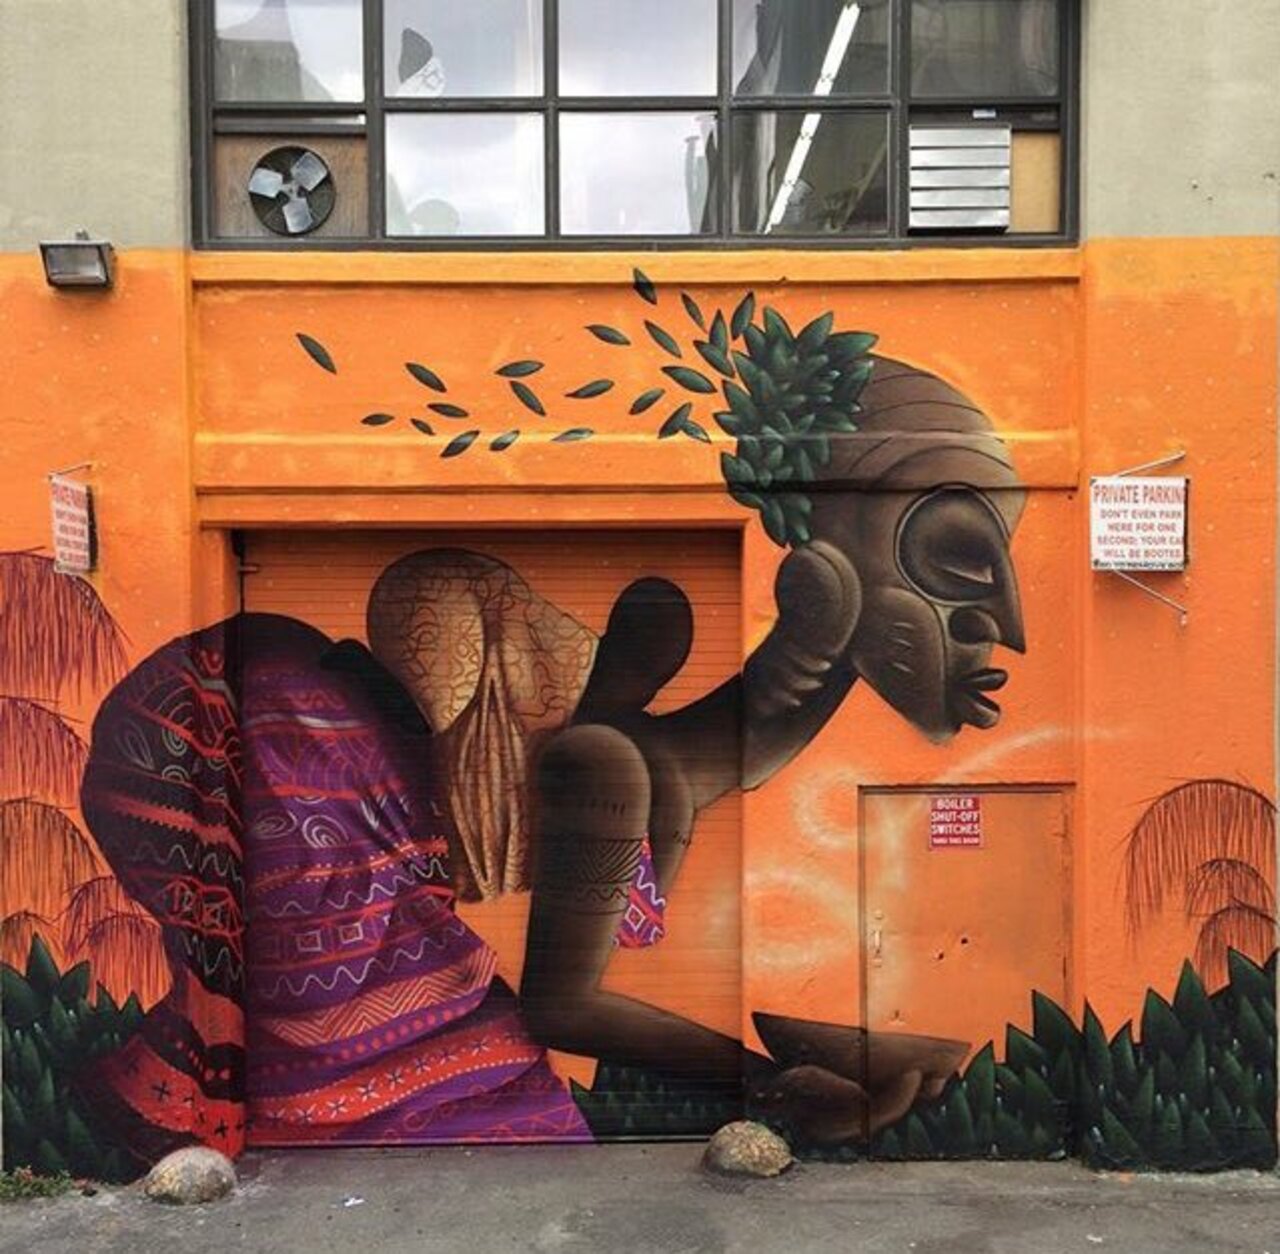 New Street Art by Alexandre Keto in NYC 

#art #graffiti #mural #streetart https://t.co/yamCwUUsTs